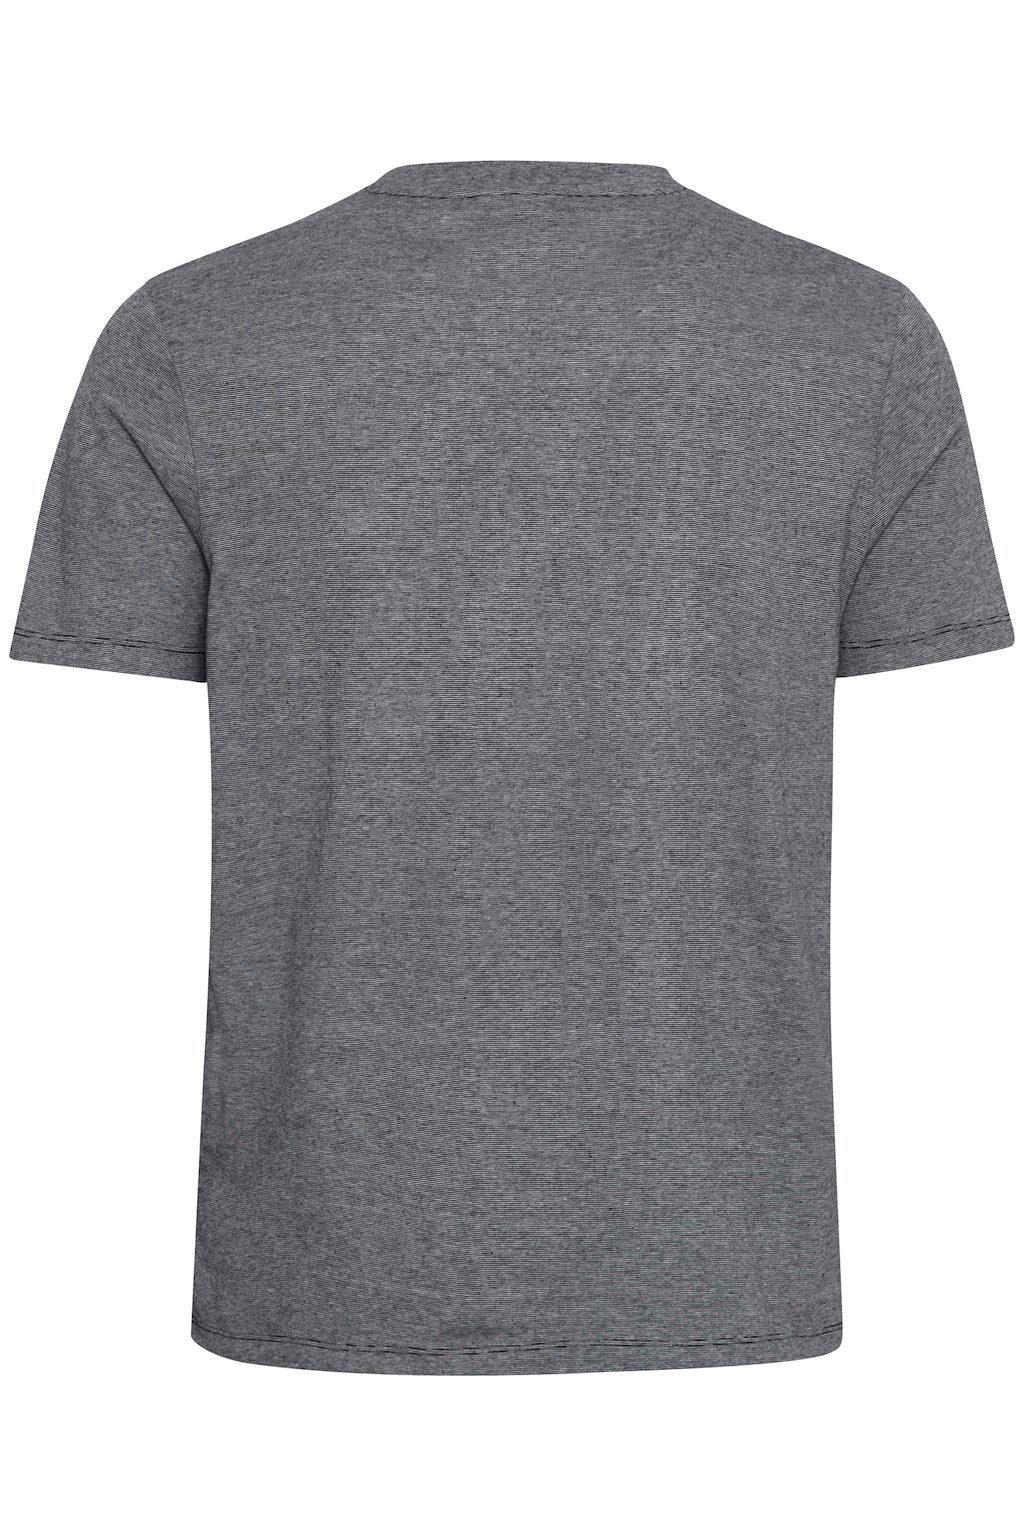 CFThor Basic T-Shirt Friday in Rundhals T-Shirt Meliert Casual Grau 5743